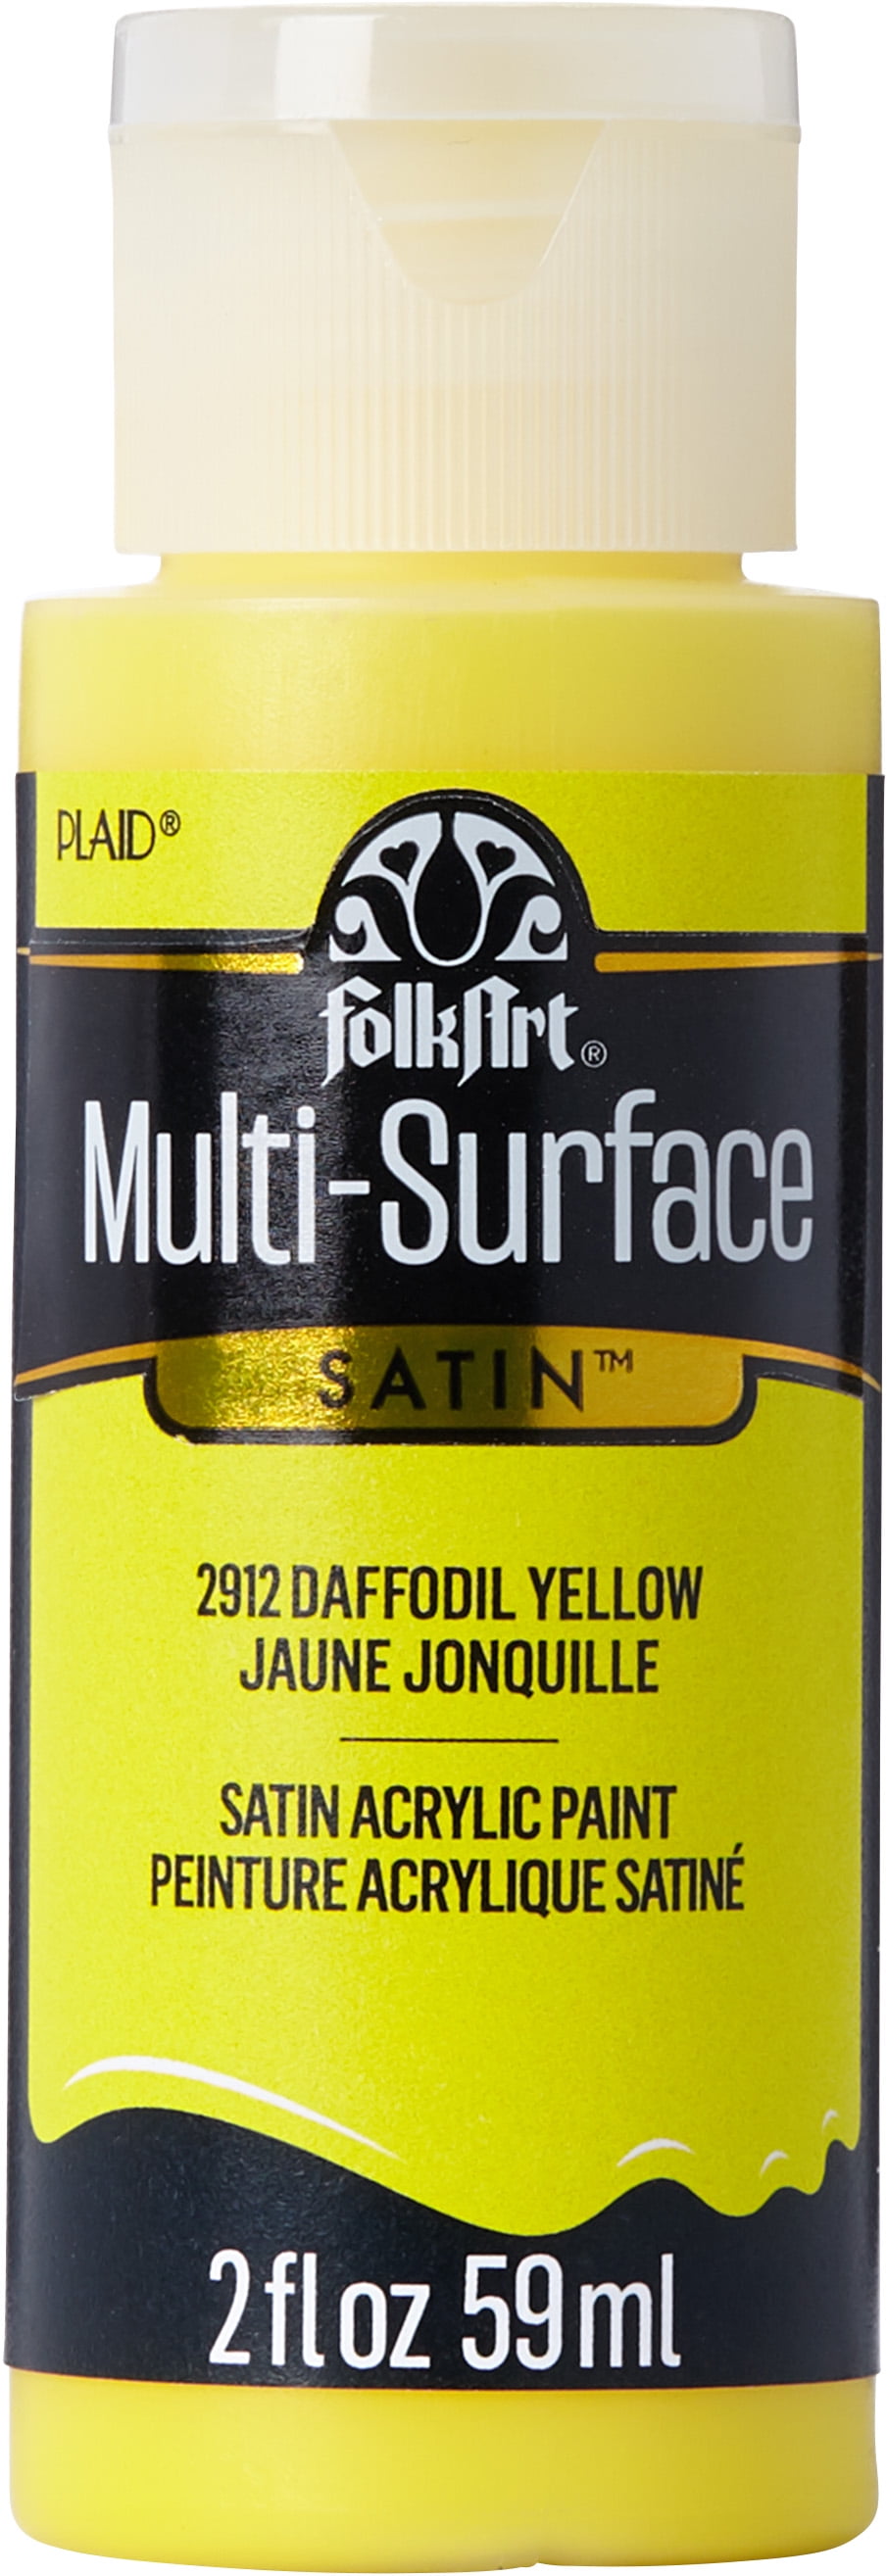  FolkArt Multi-Surface Satin Acrylic Paint in Assorted Colors,  16 oz, Medium Gray 16 Fl Oz : Everything Else